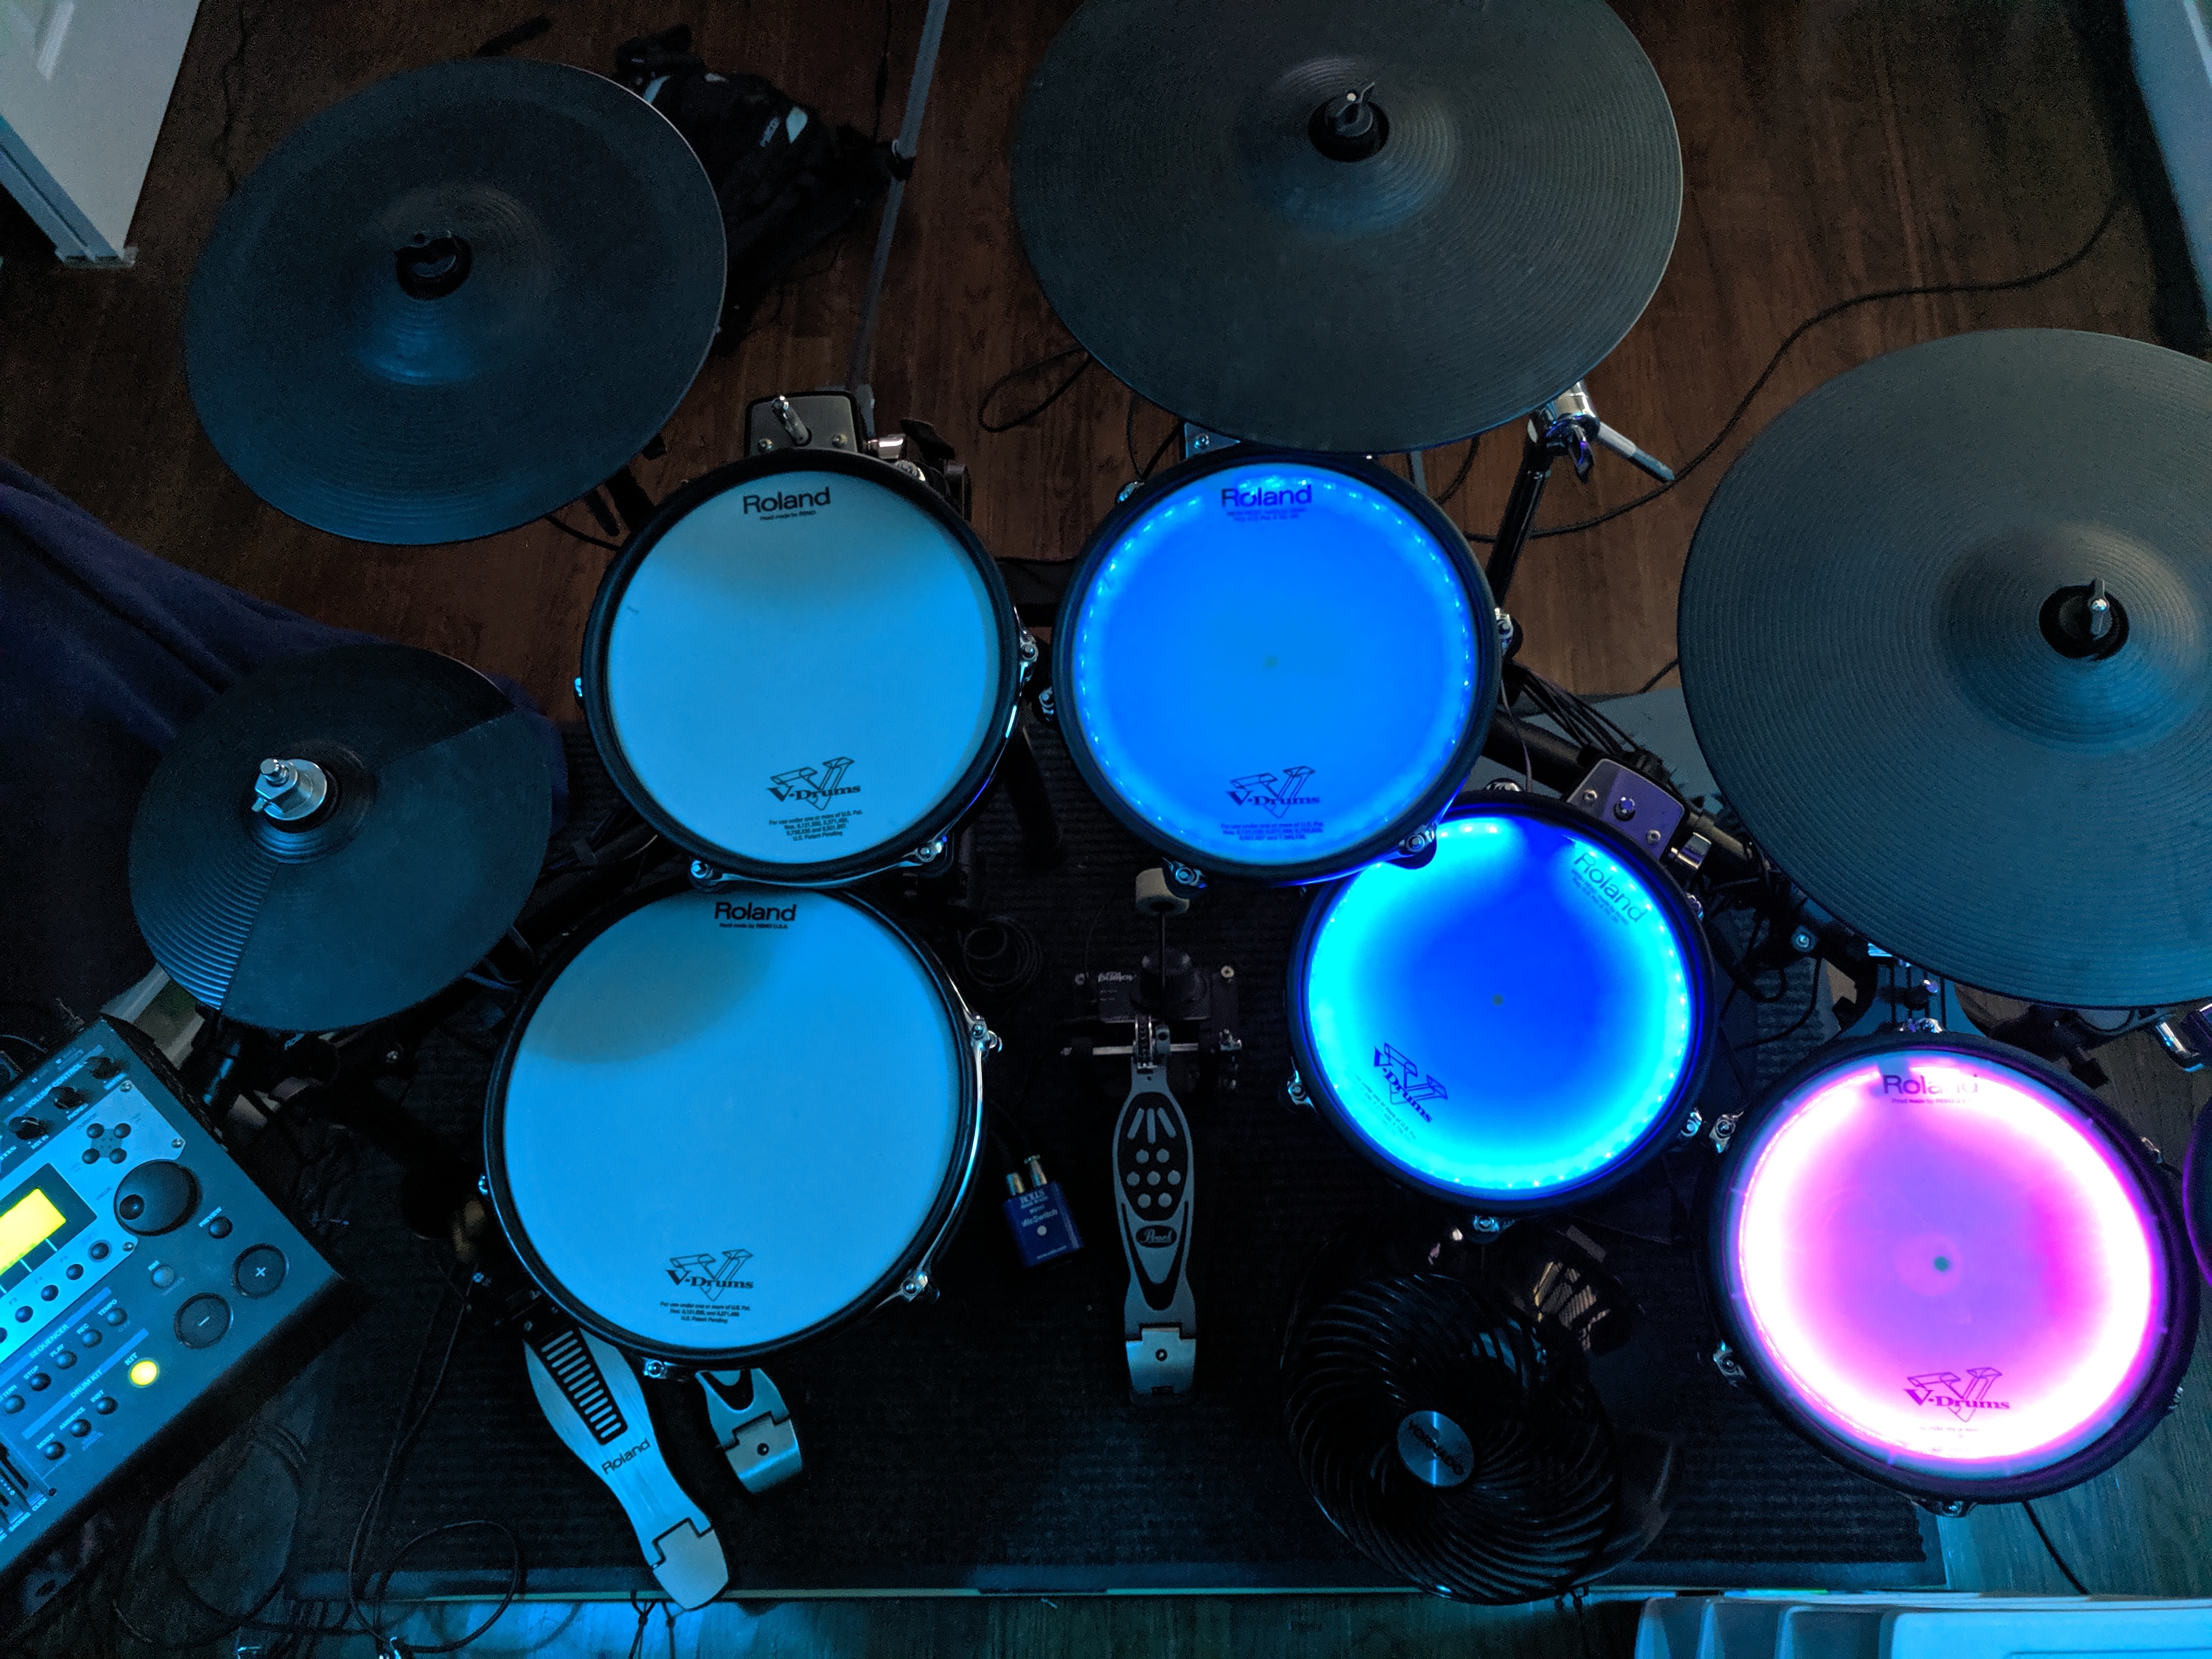 MIDI Drum Kit triggering LED light strips